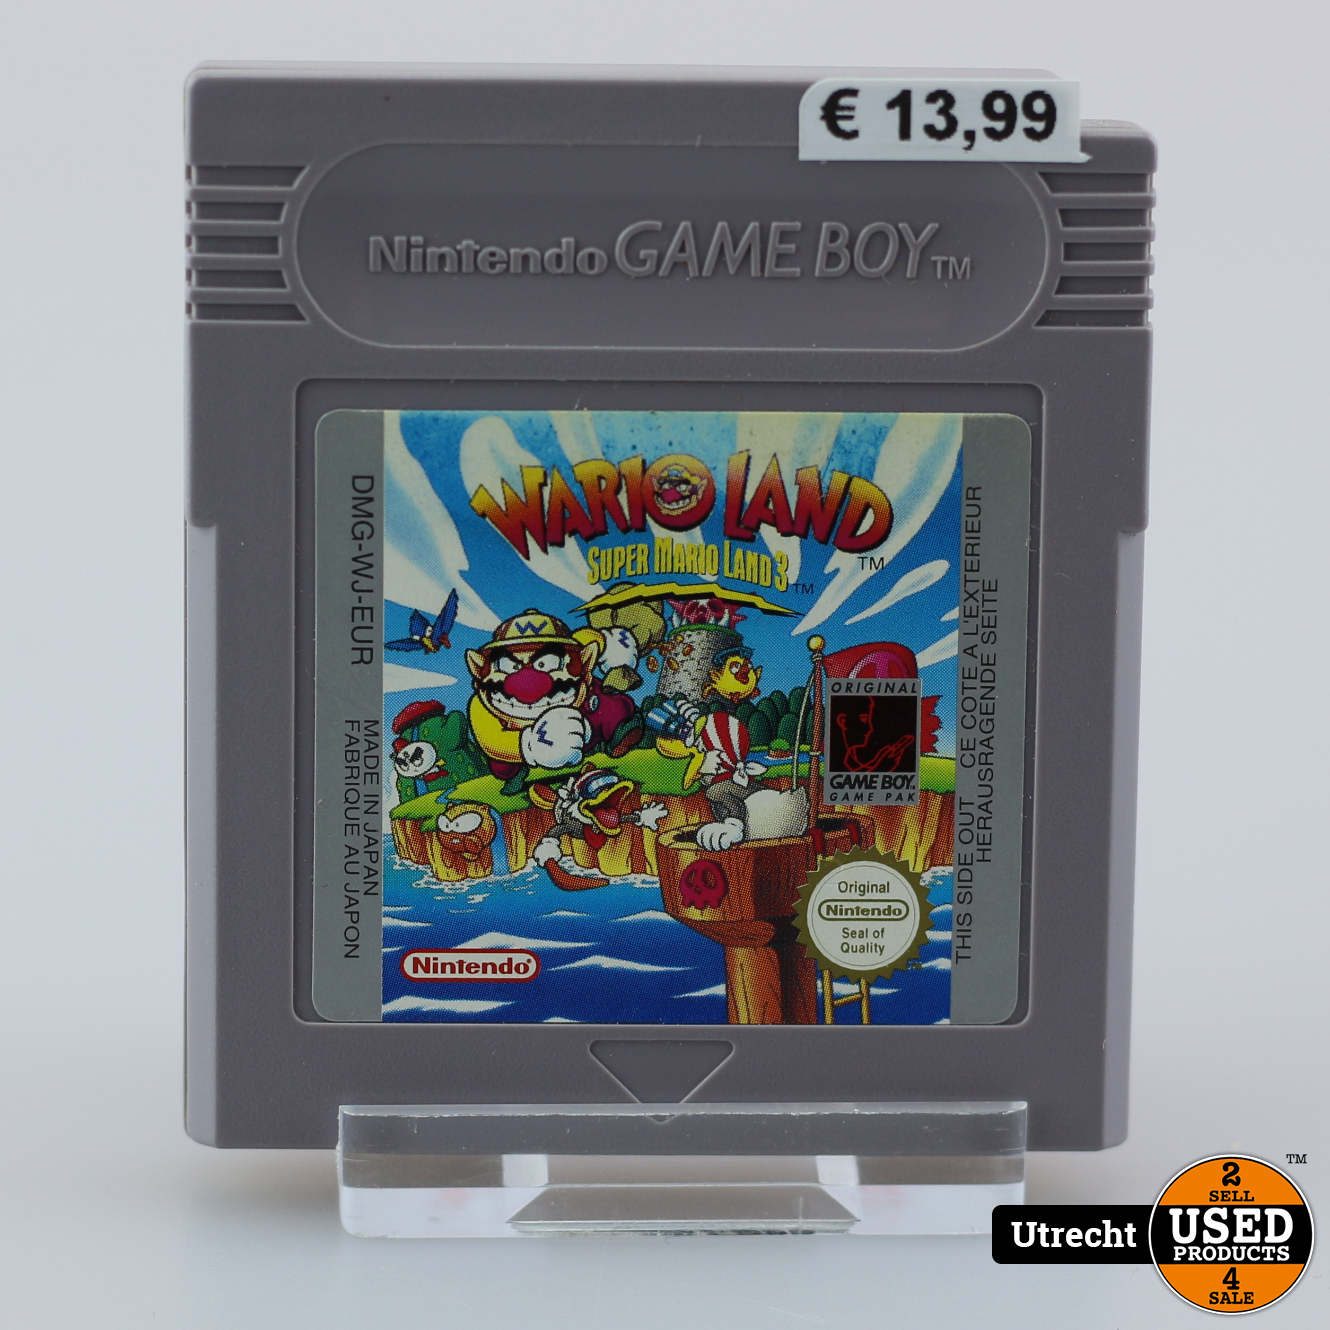 Nintendo Gameboy Game: Super Mario land 3 - Used Products Utrecht